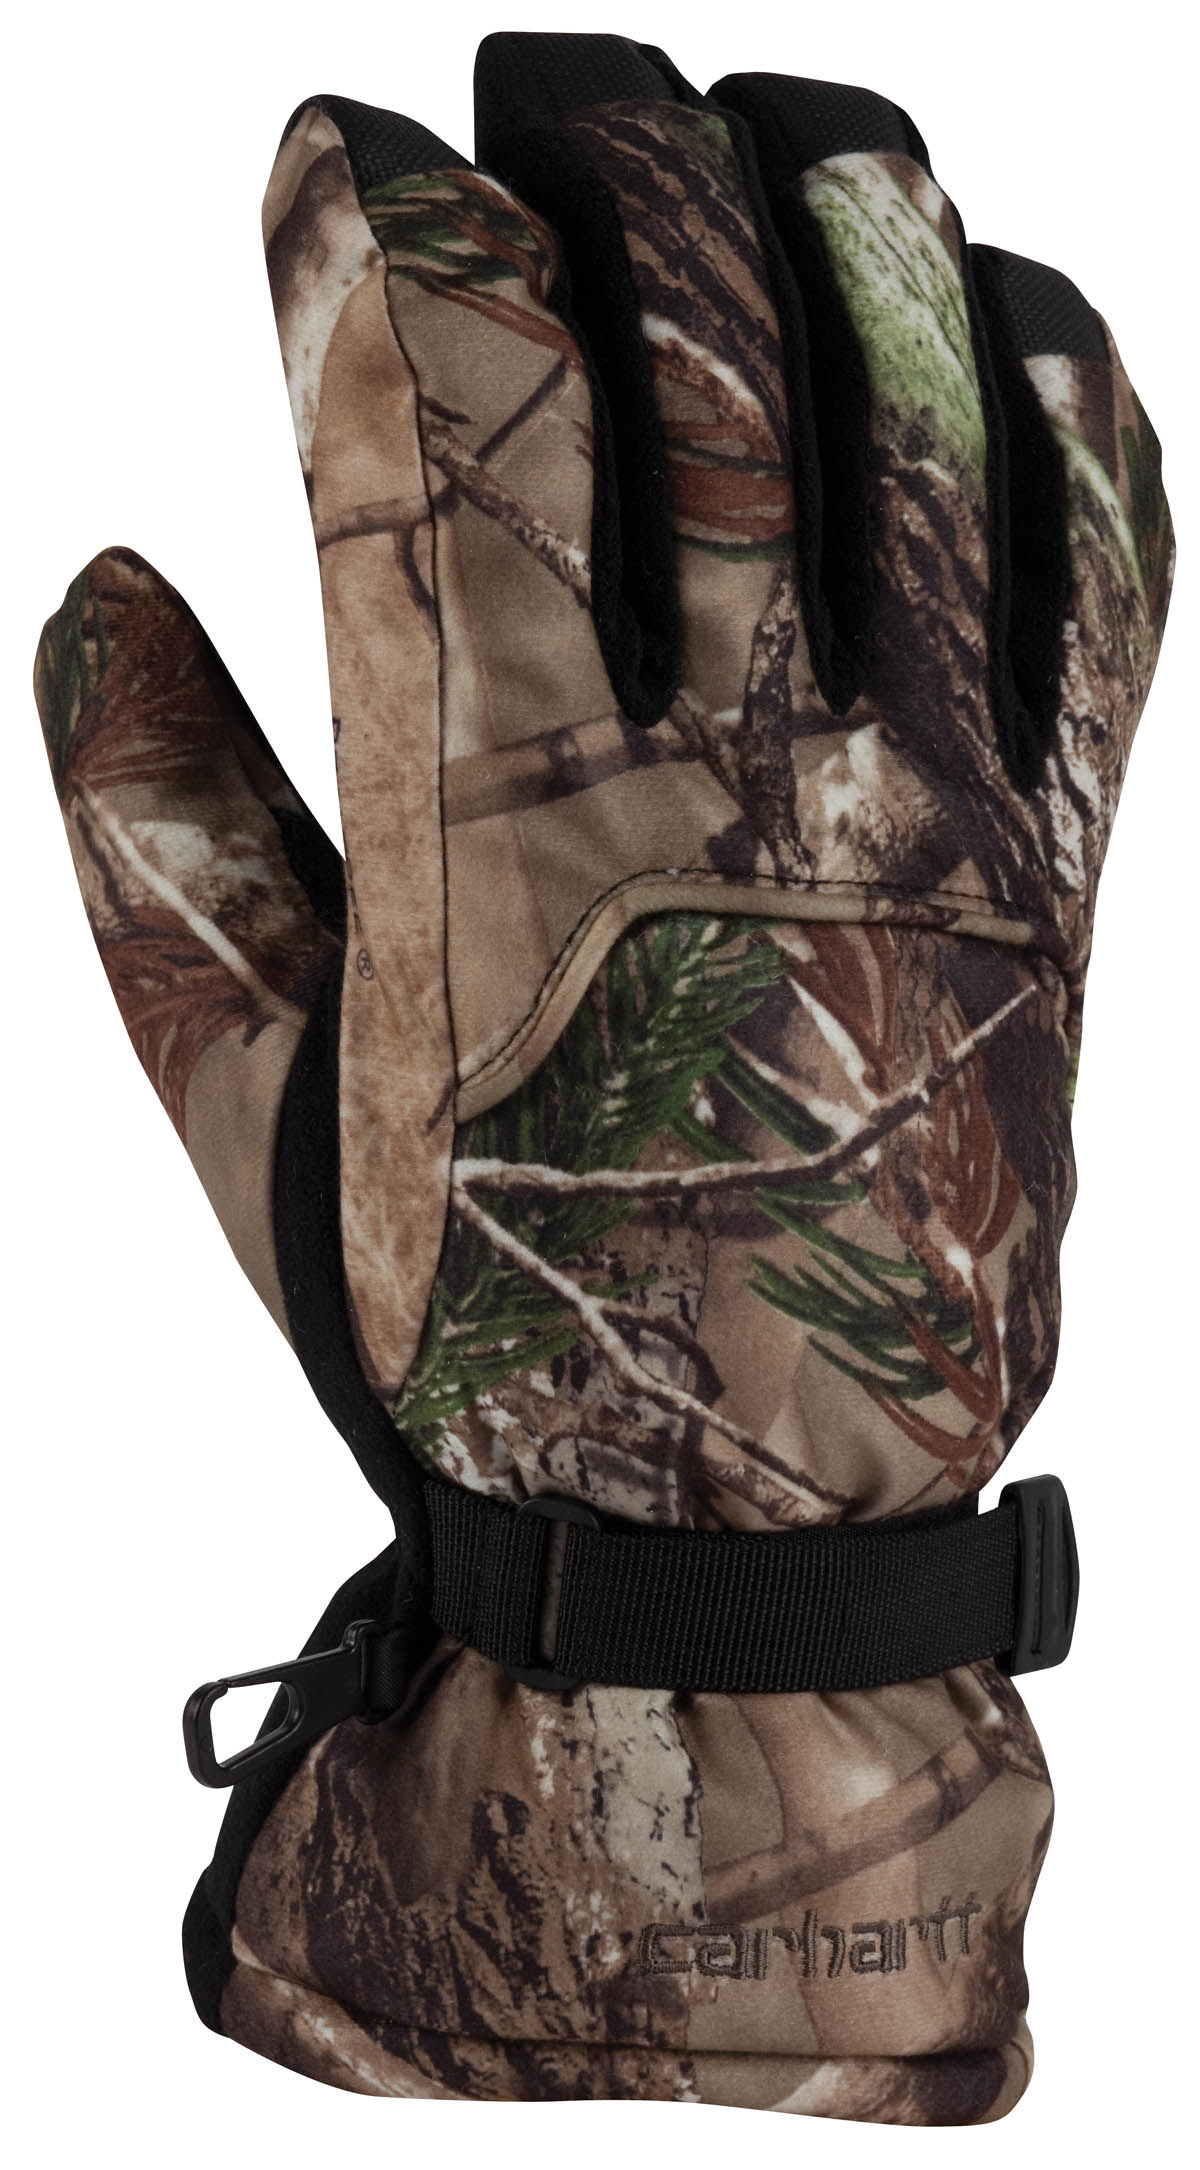 Carhartt Men's TS Gauntlet Glove Discontinued Pricing